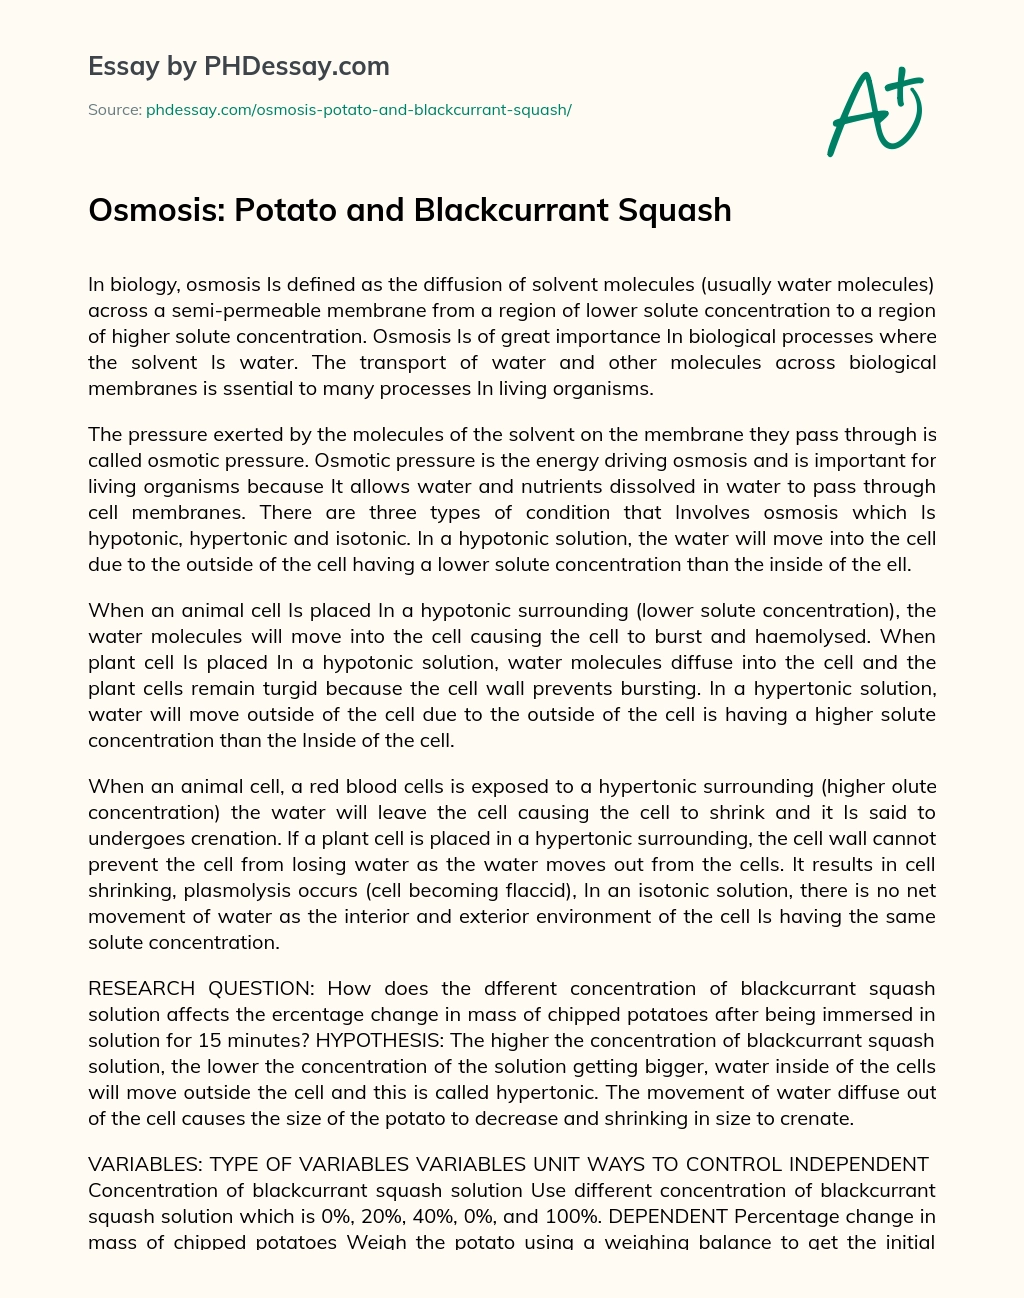 Osmosis: Potato and Blackcurrant Squash essay